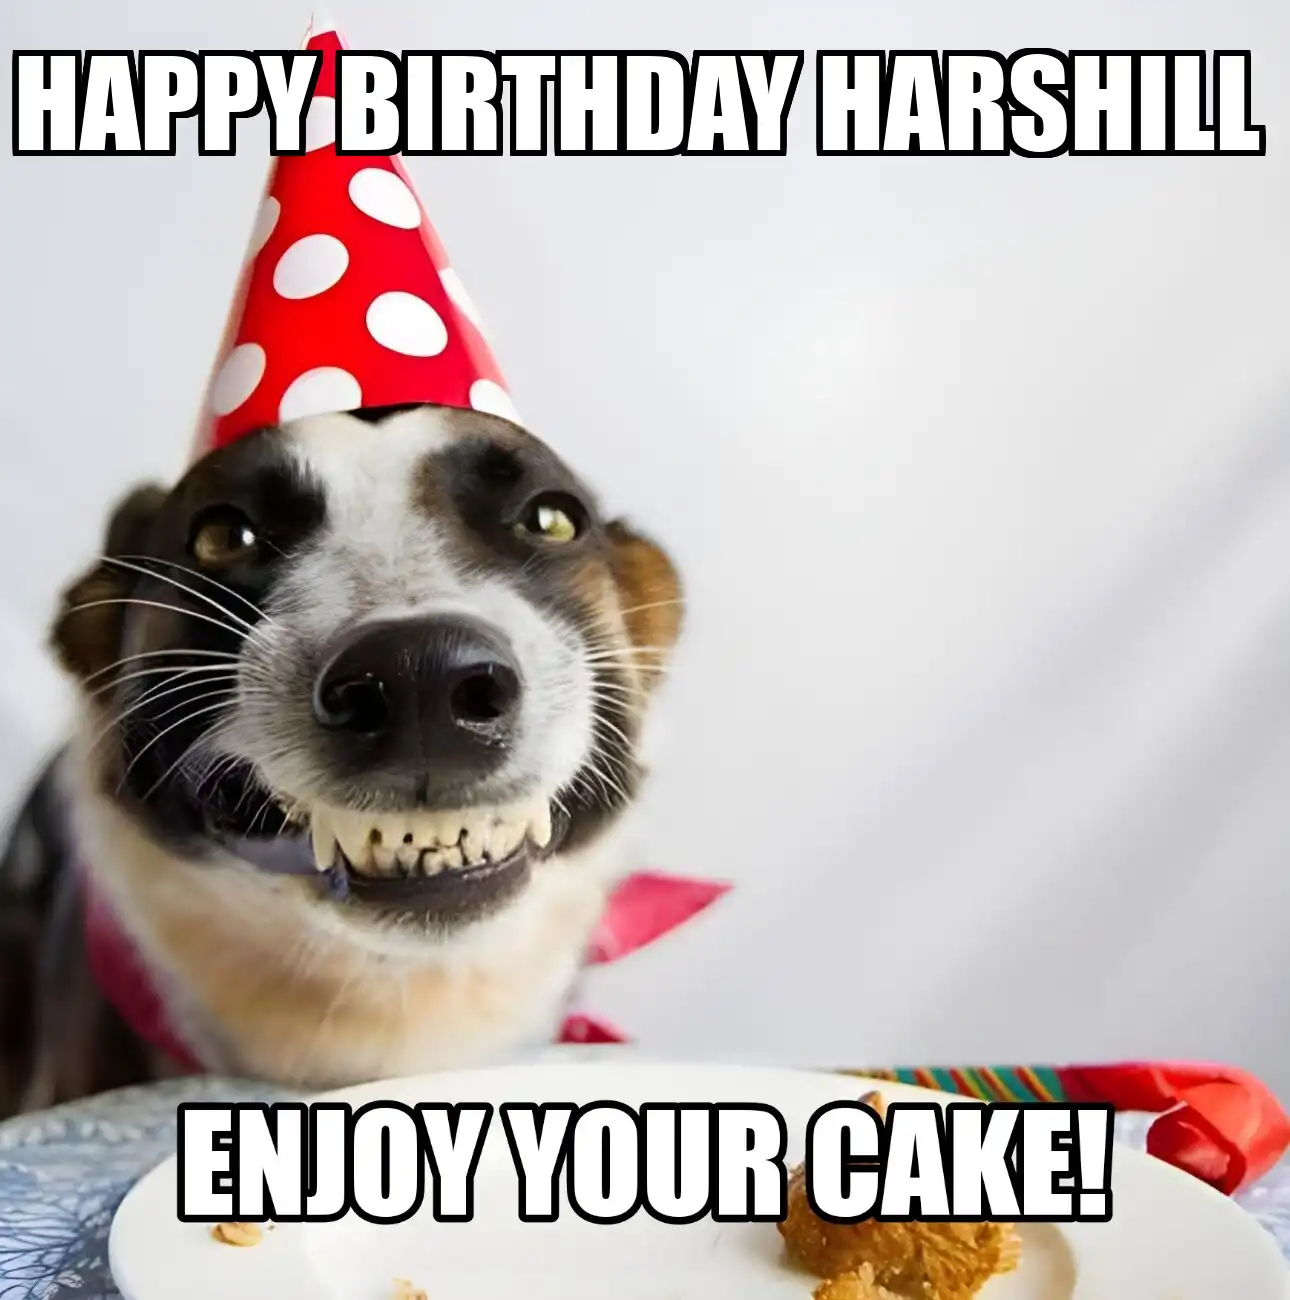 Happy Birthday Harshill Enjoy Your Cake Dog Meme